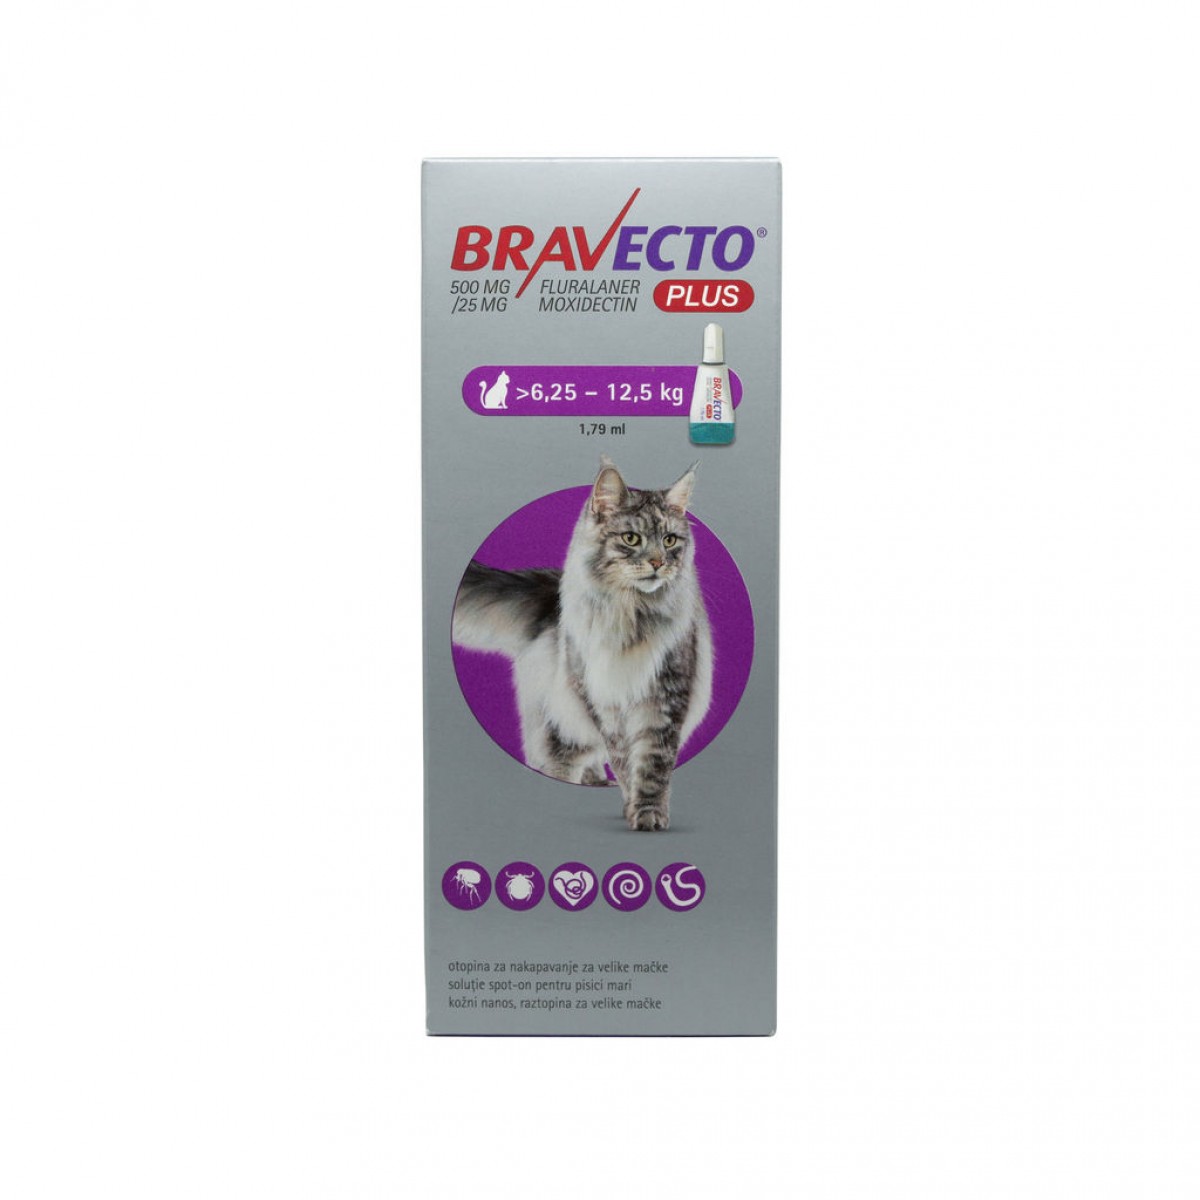 Bravecto Plus Spot On pentru pisici intre 6.25 si 12.5kg, 1 pipeta, 500mg, Antiparazitare externe, Antiparazitare, Pisici 